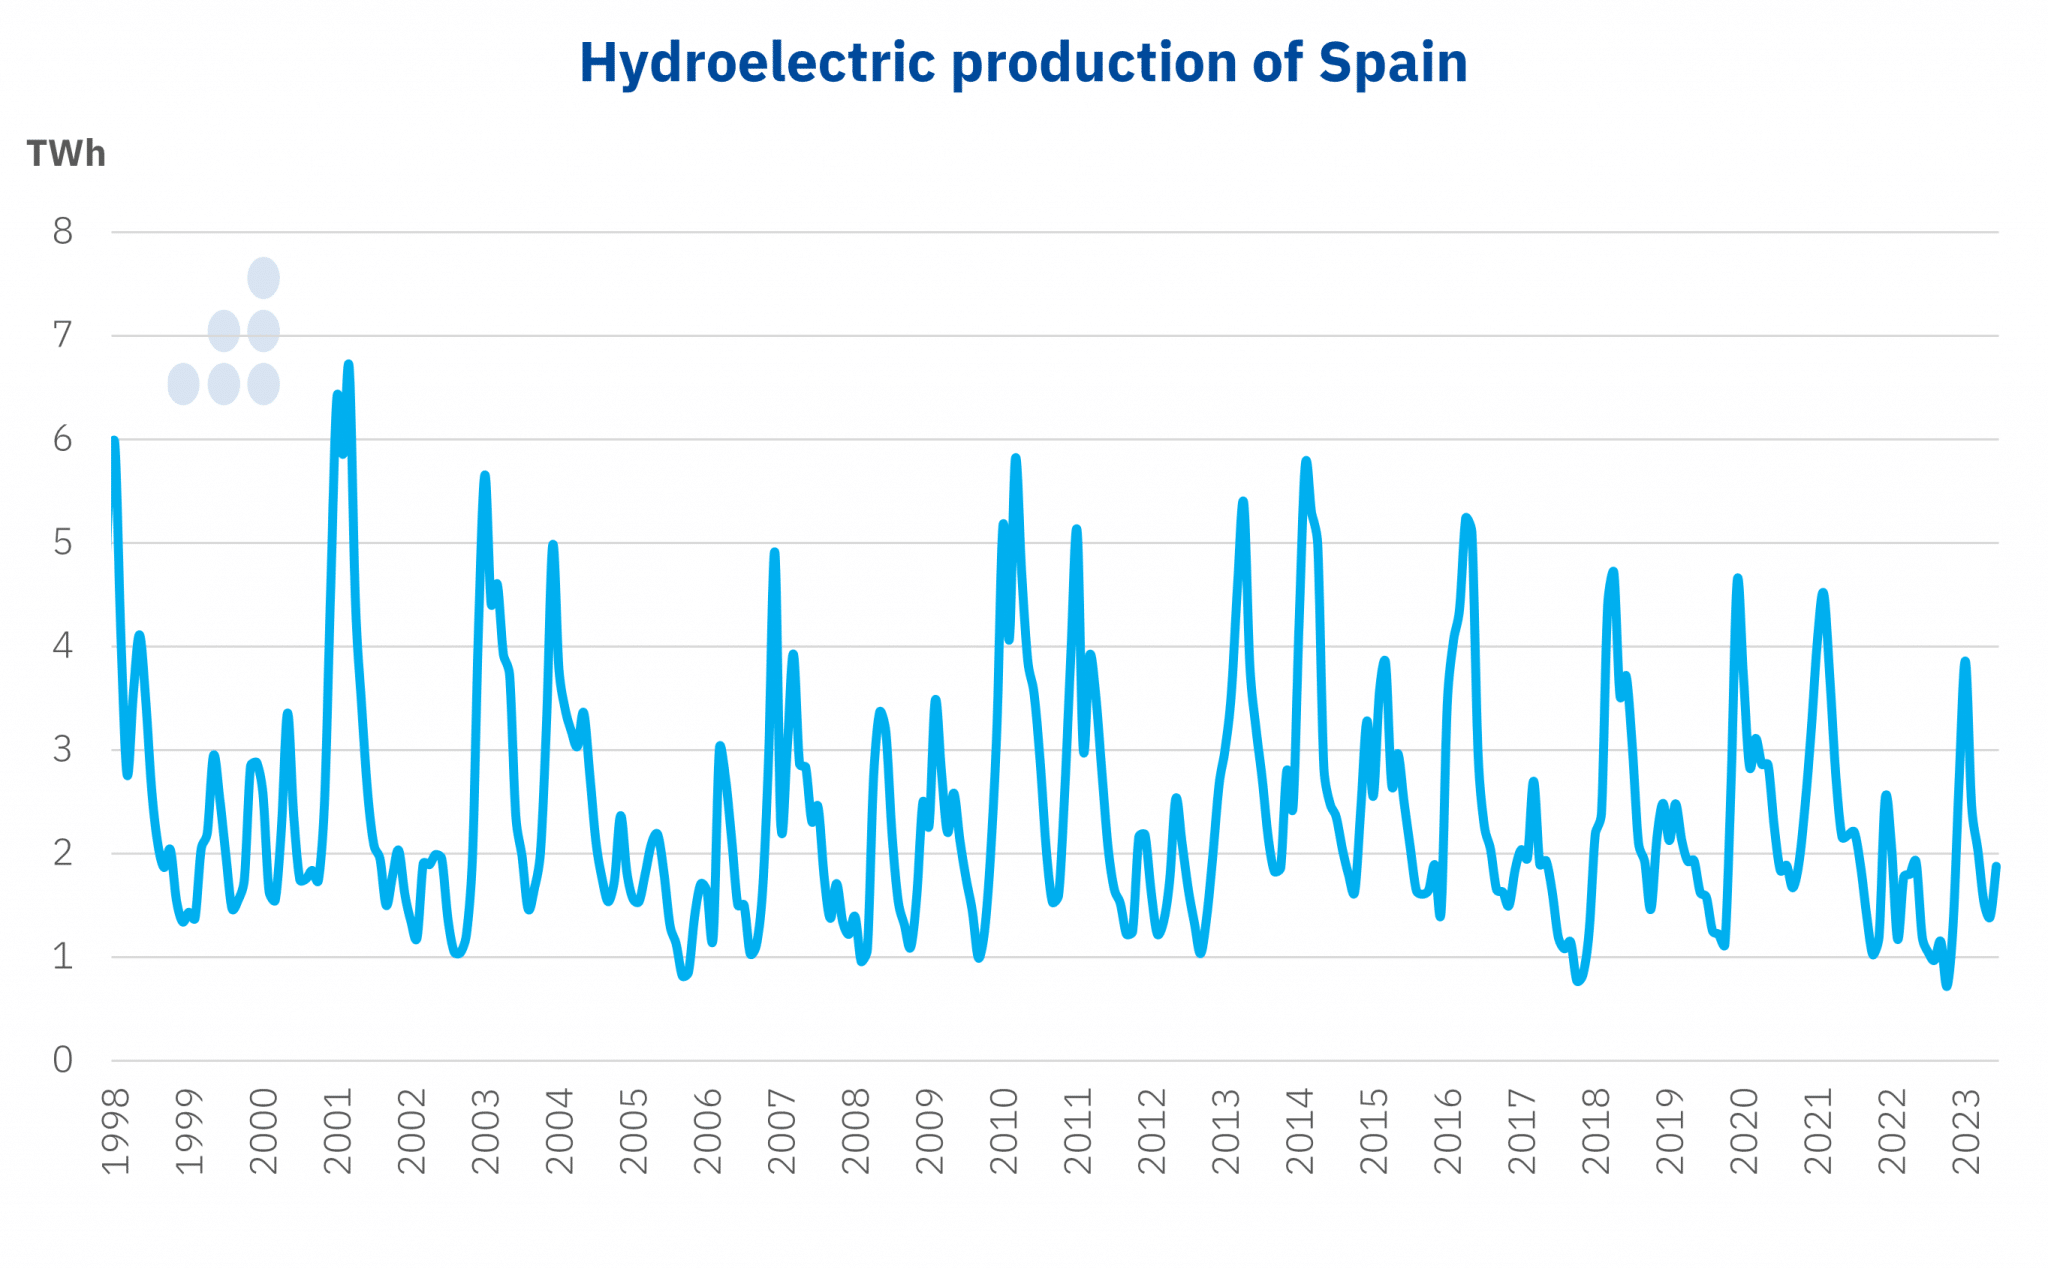 AleaSoft - Spain hidroelectric production